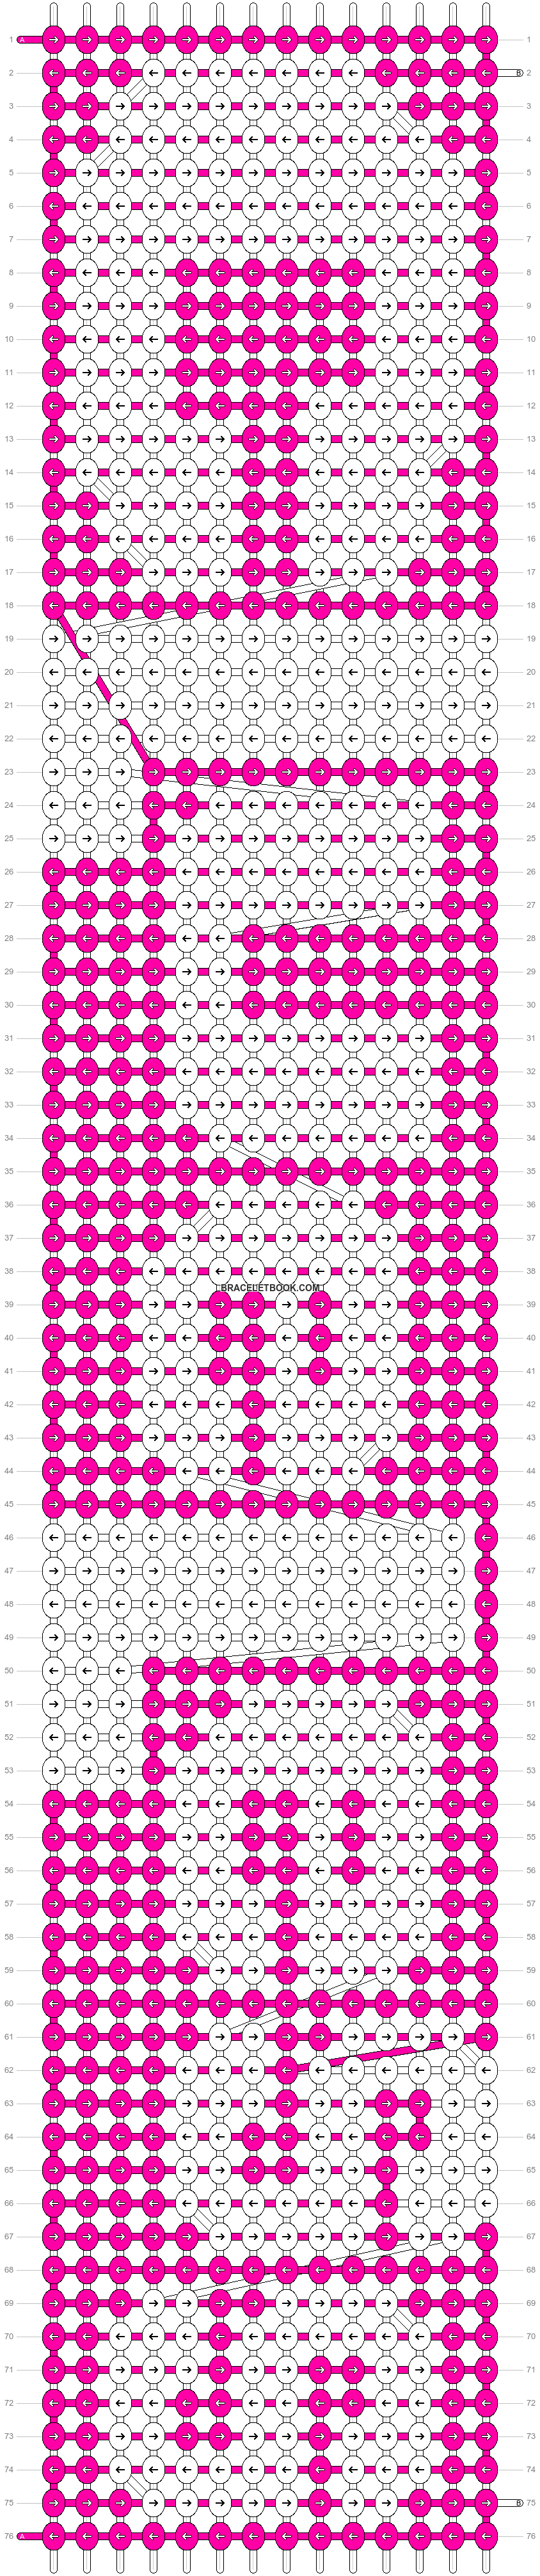 Alpha pattern #37464 variation #40147 pattern